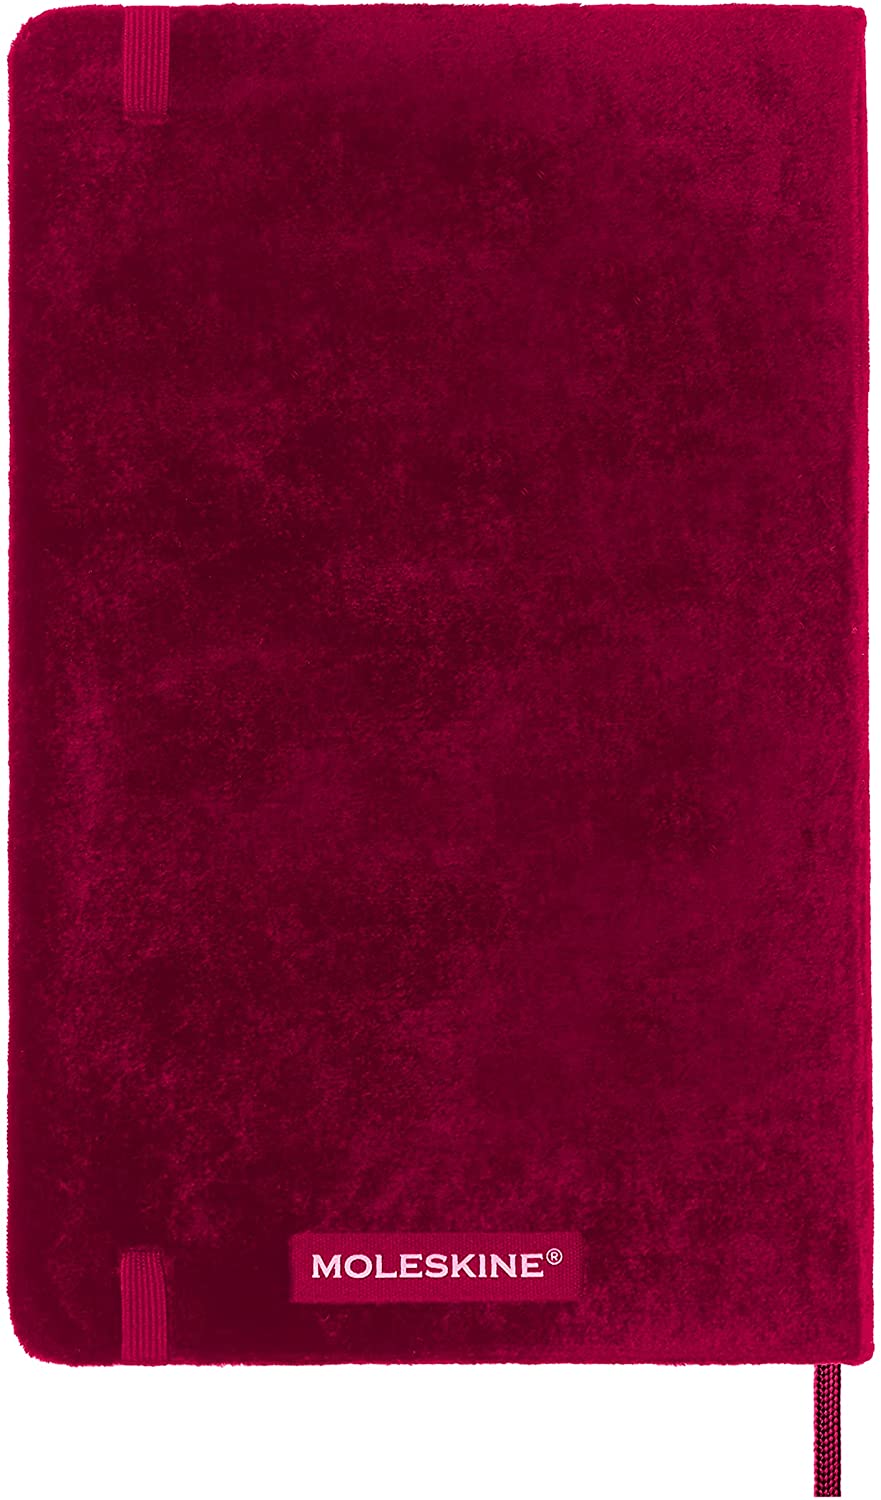 Carnet - Moleskine Velvet - Large, Hard Cover, Ruled - Pink | Moleskine image5